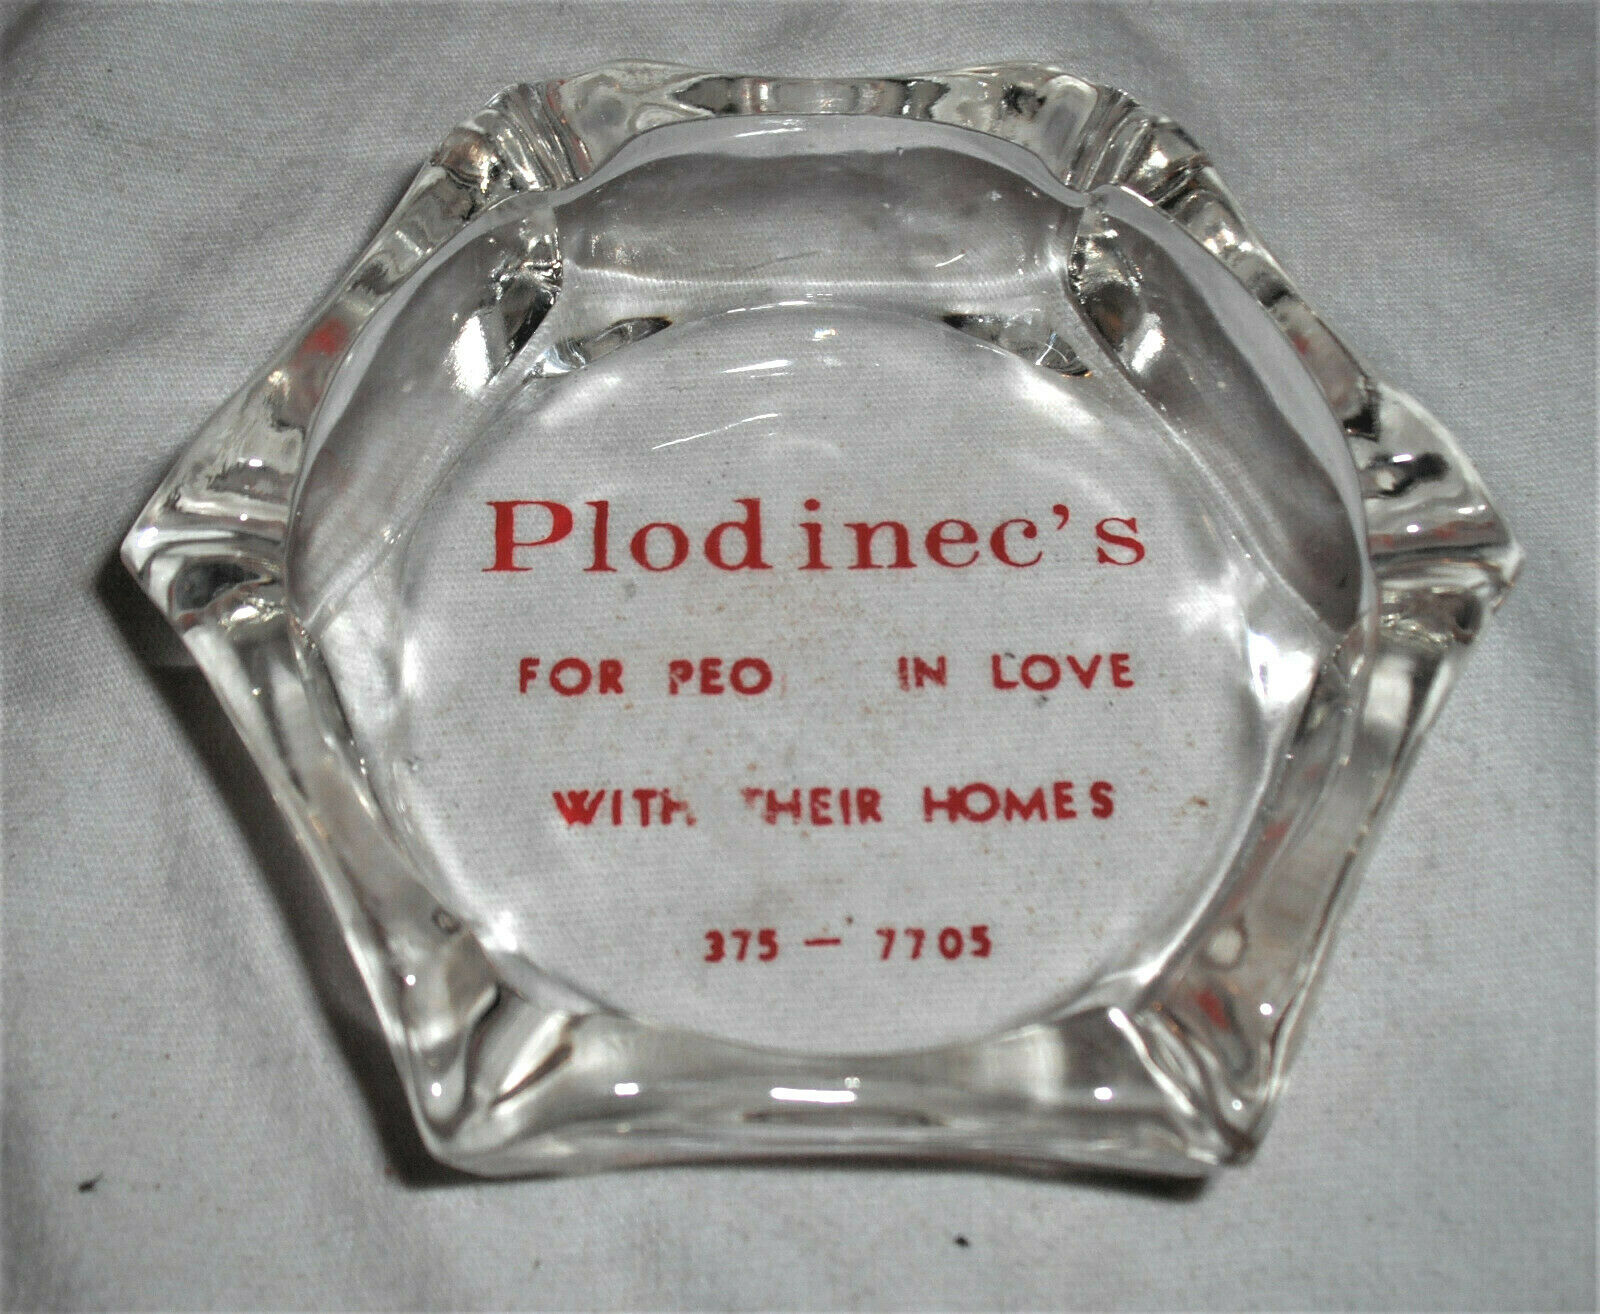 Vintage 1950's Plodinec's Furniture-aliquippa, Pa Glass Ashtray-advertising